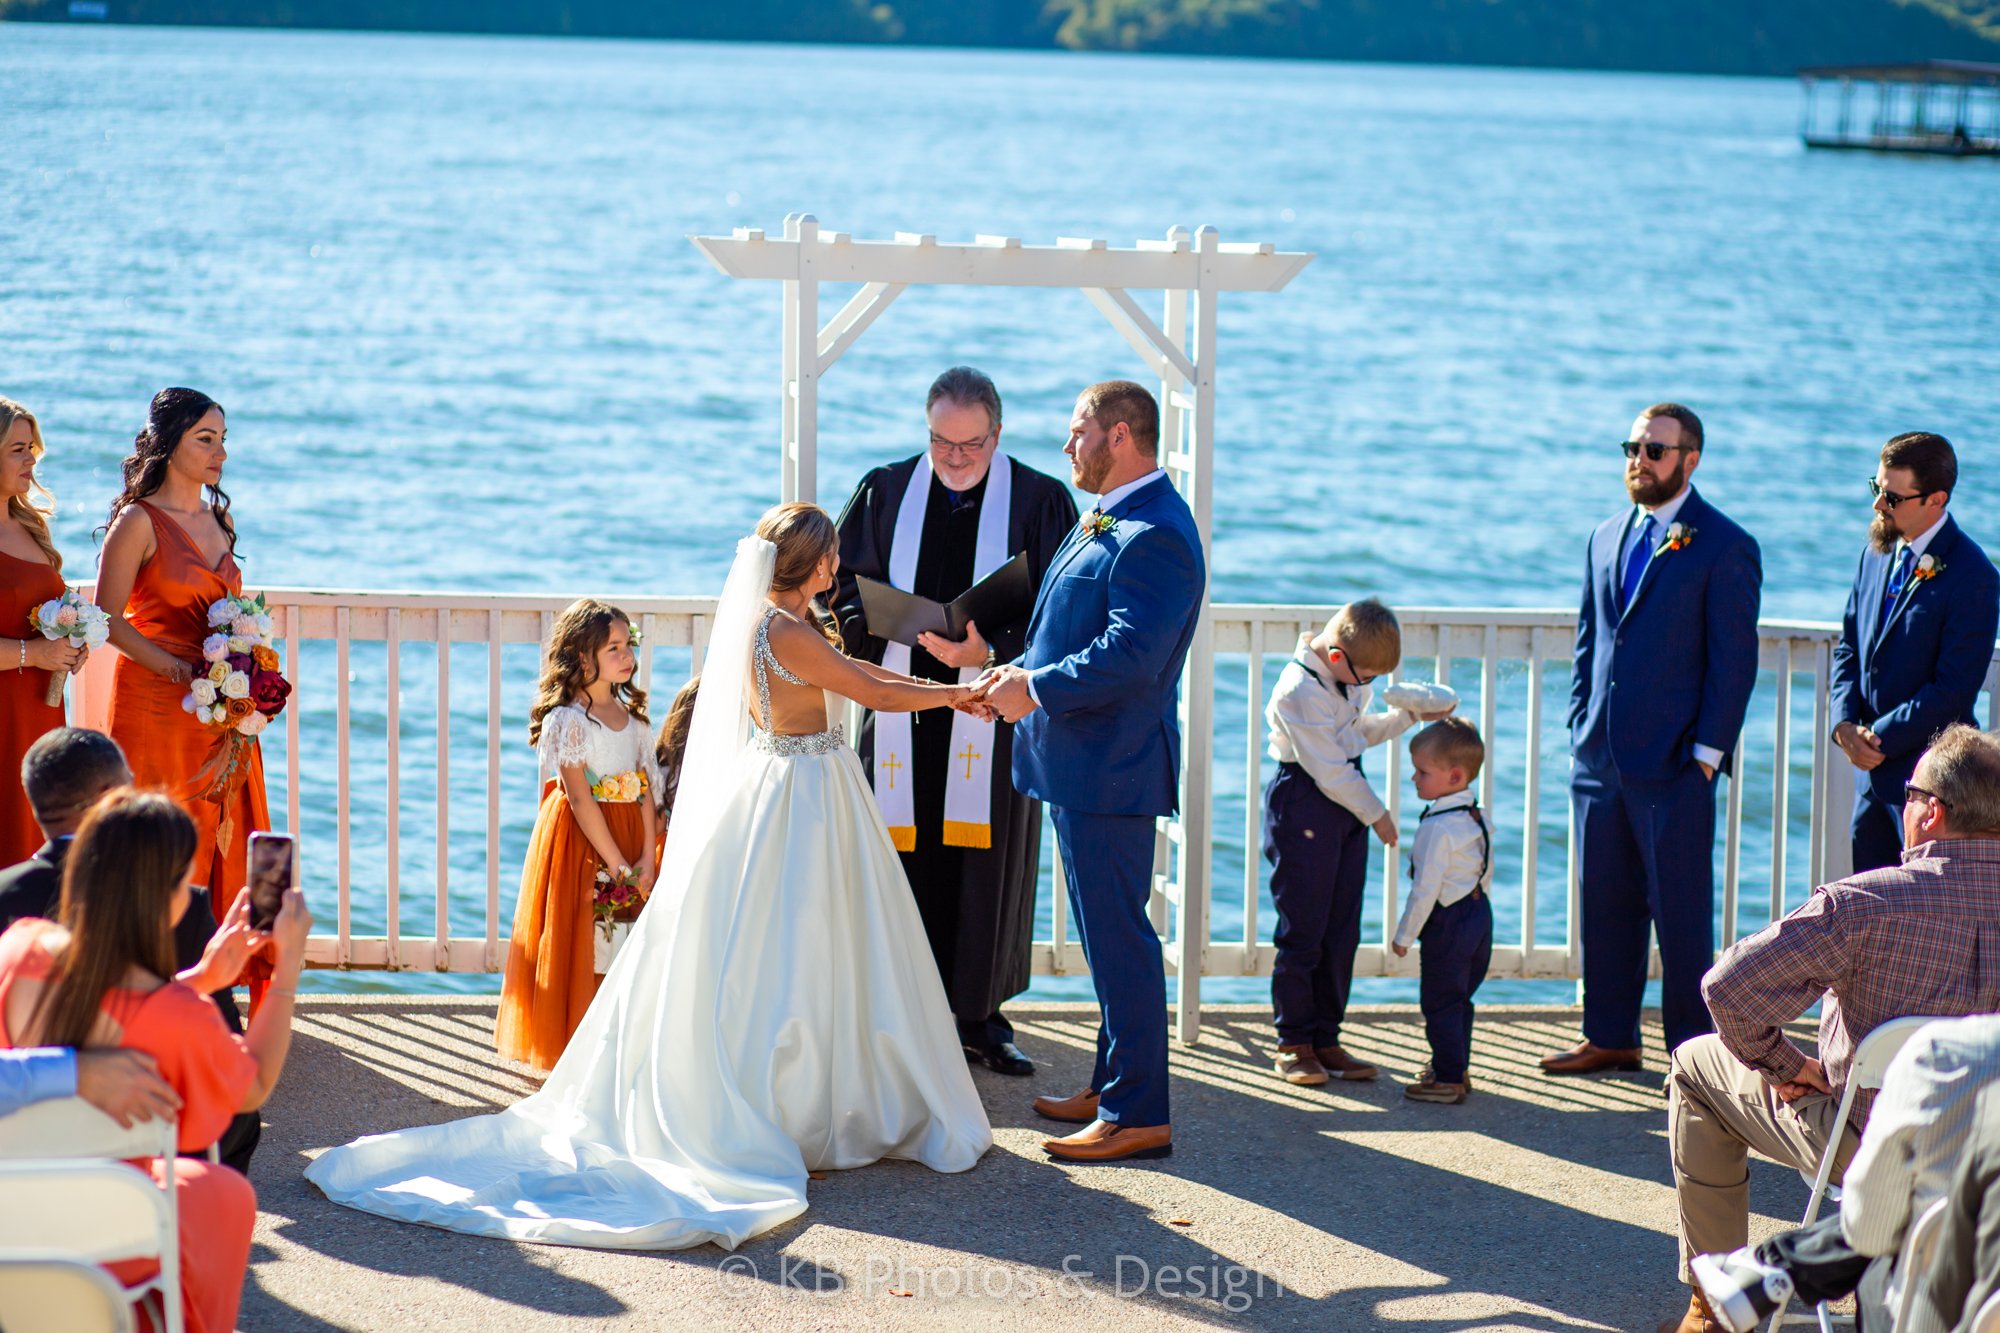 Ruqqia-Colton-Wedding-Photos-Margaritaville-Lake-Resort-Jefferson-City-Missouri-destination-wedding-photos-Missouri-KB-Photos-and-Design-482.jpg